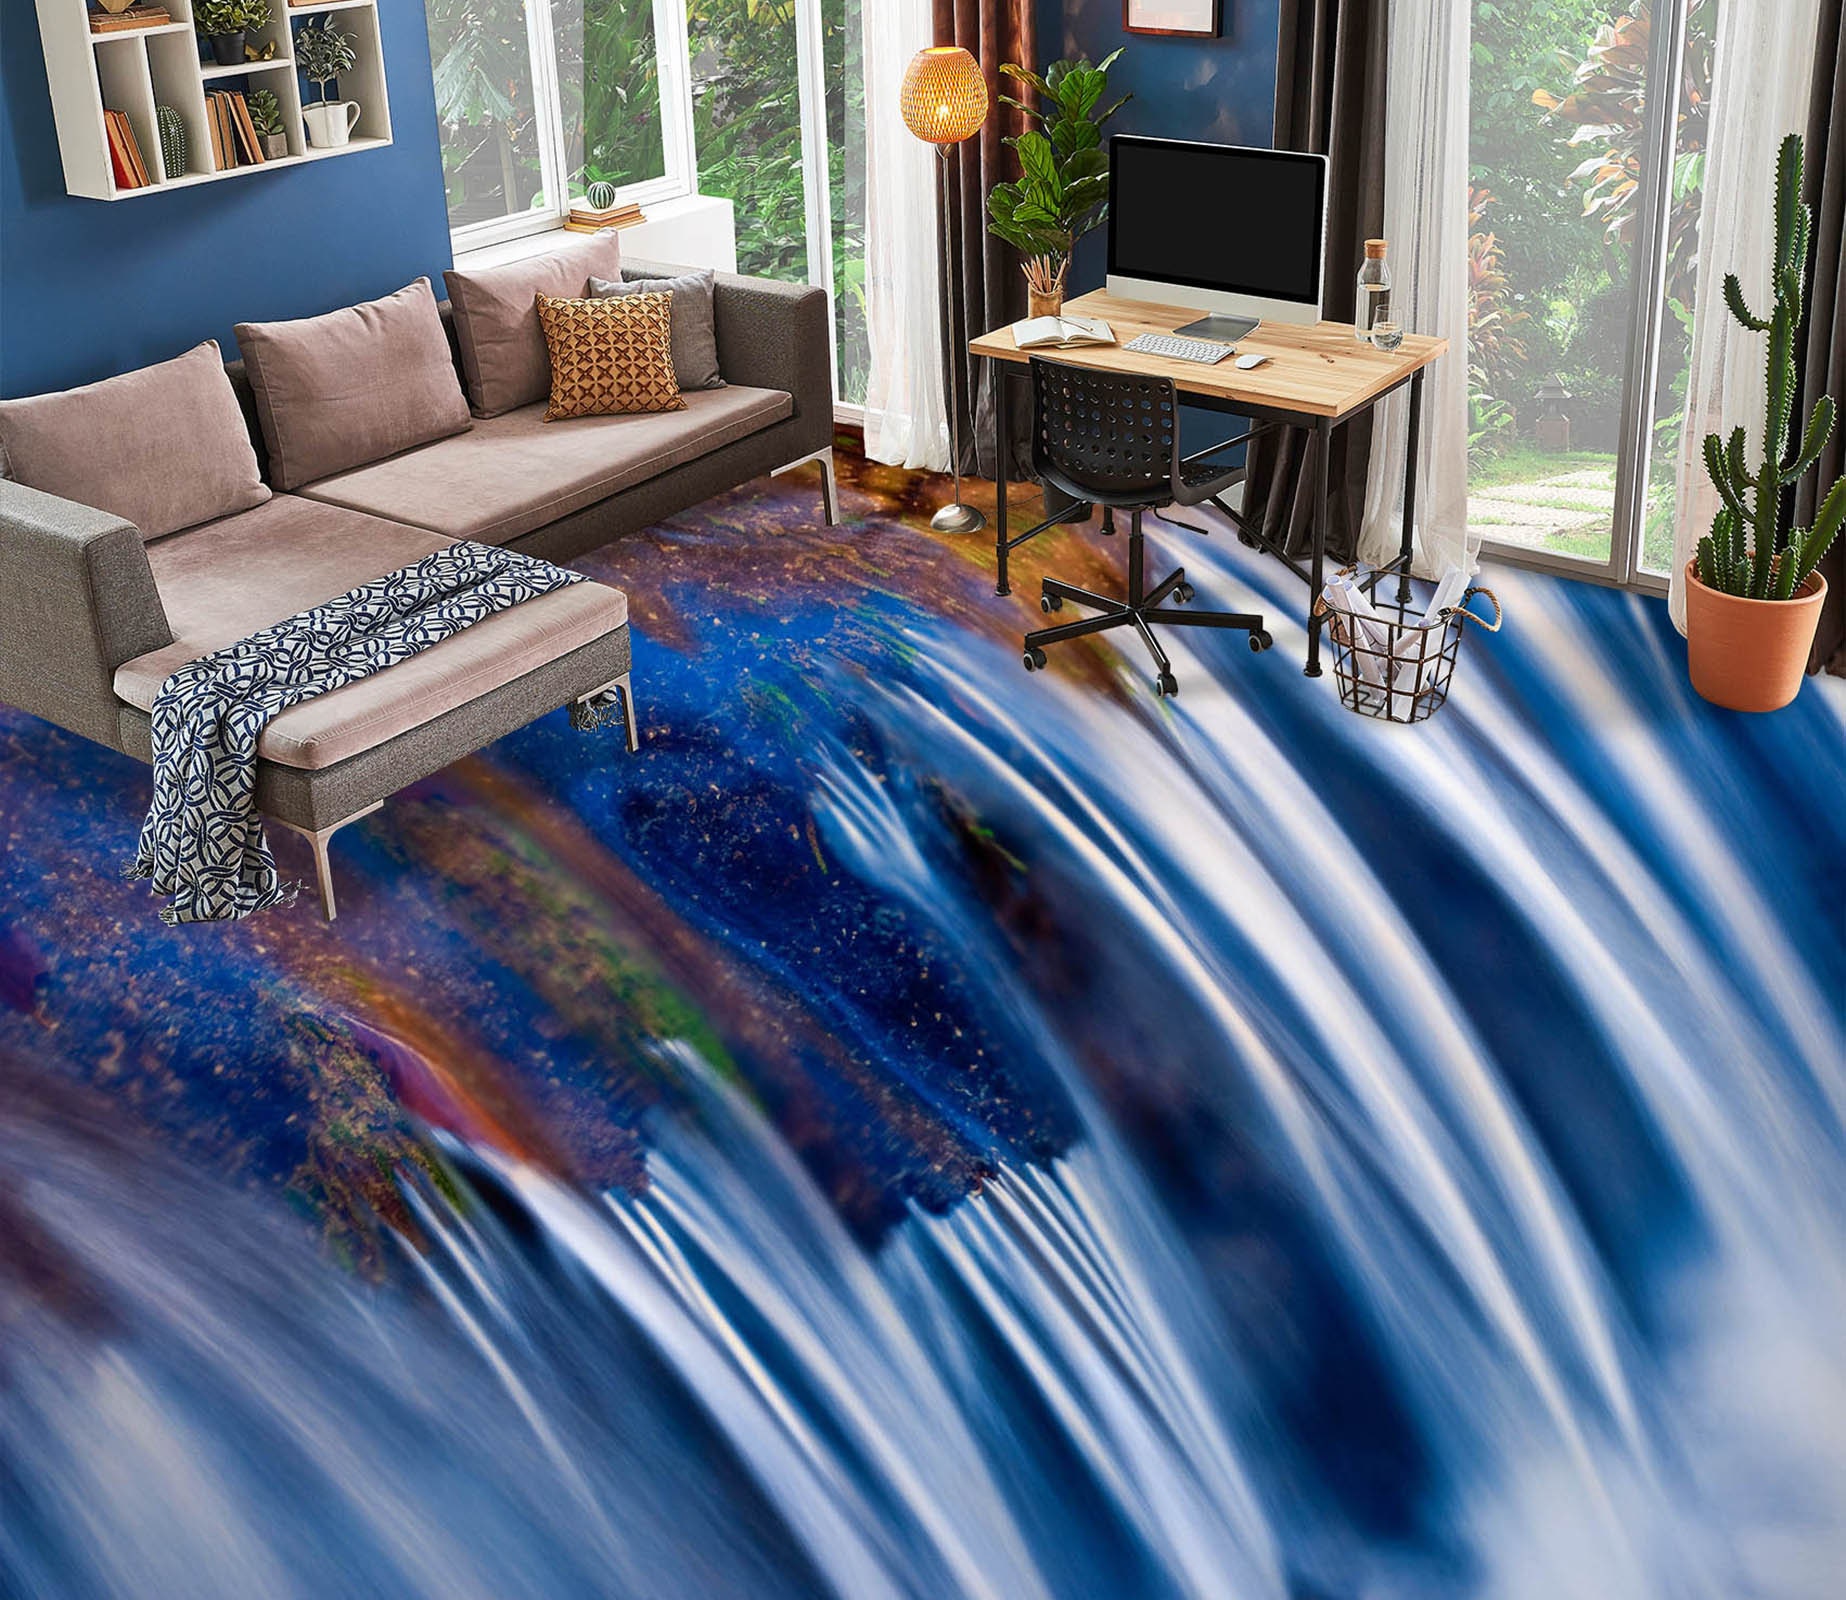 Tender Blue Kitty 3D Full Wall Mural Photo Wallpaper Printing Home